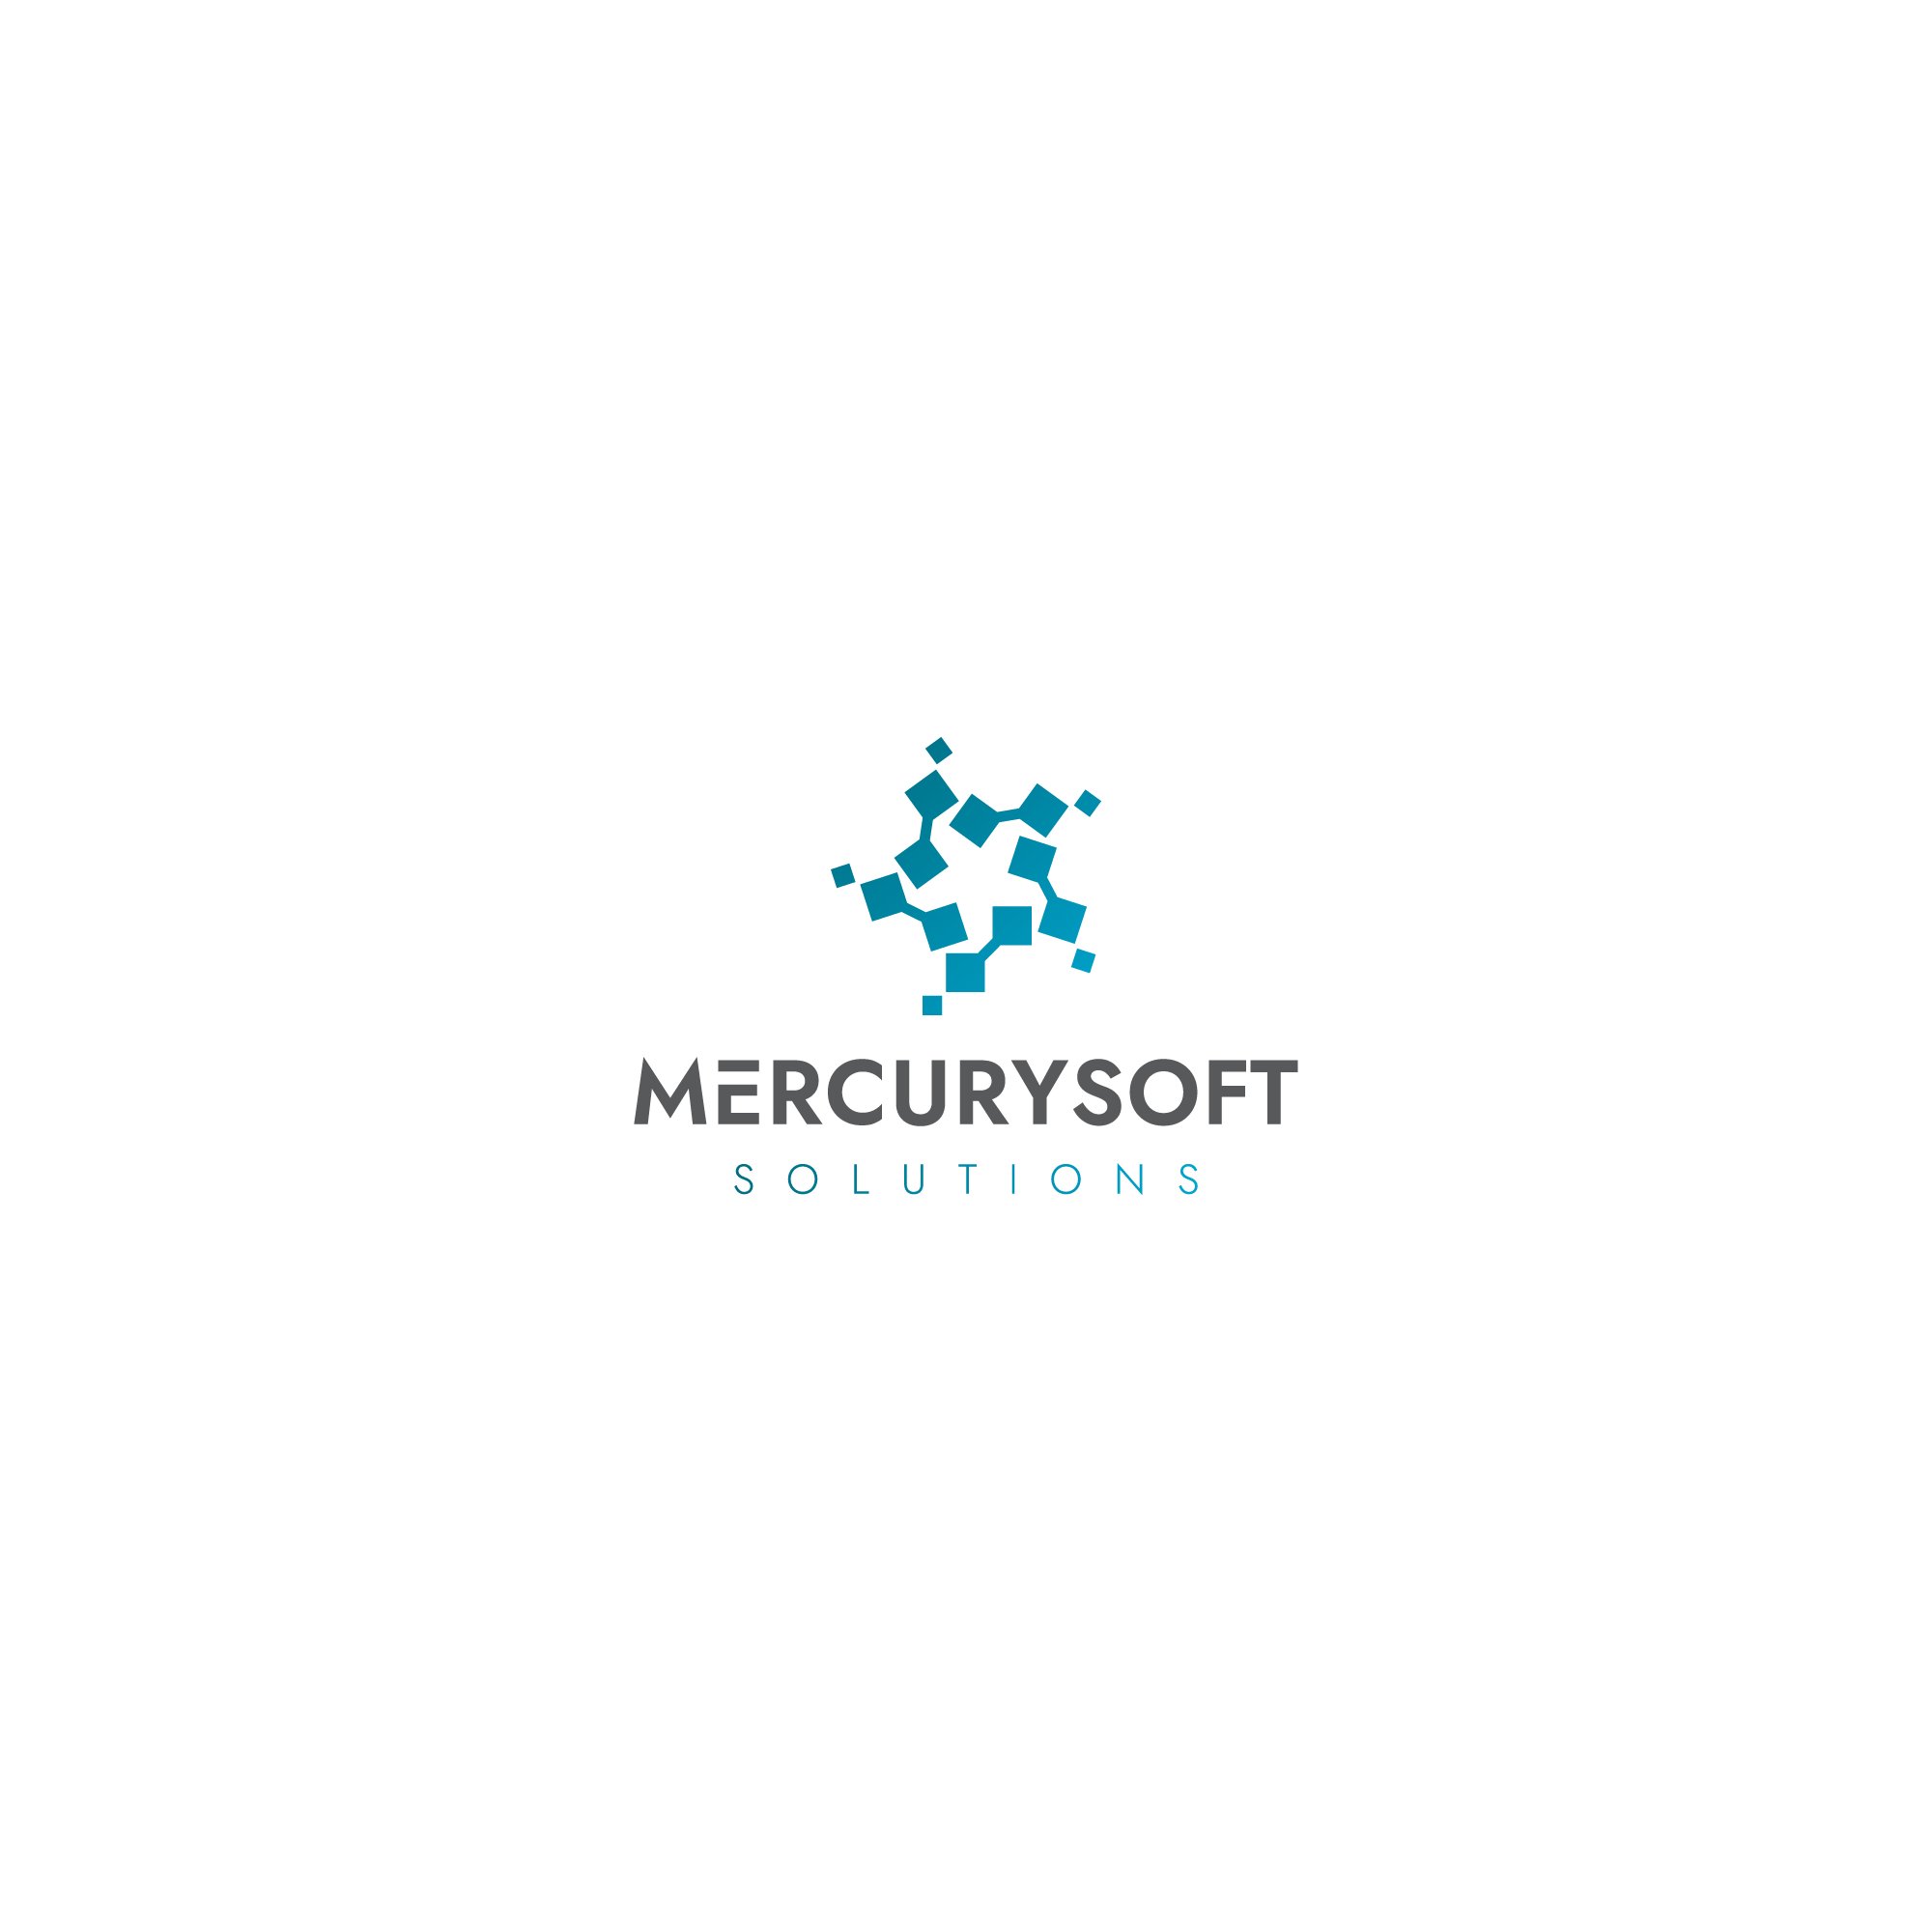 MercurySoft Solutions